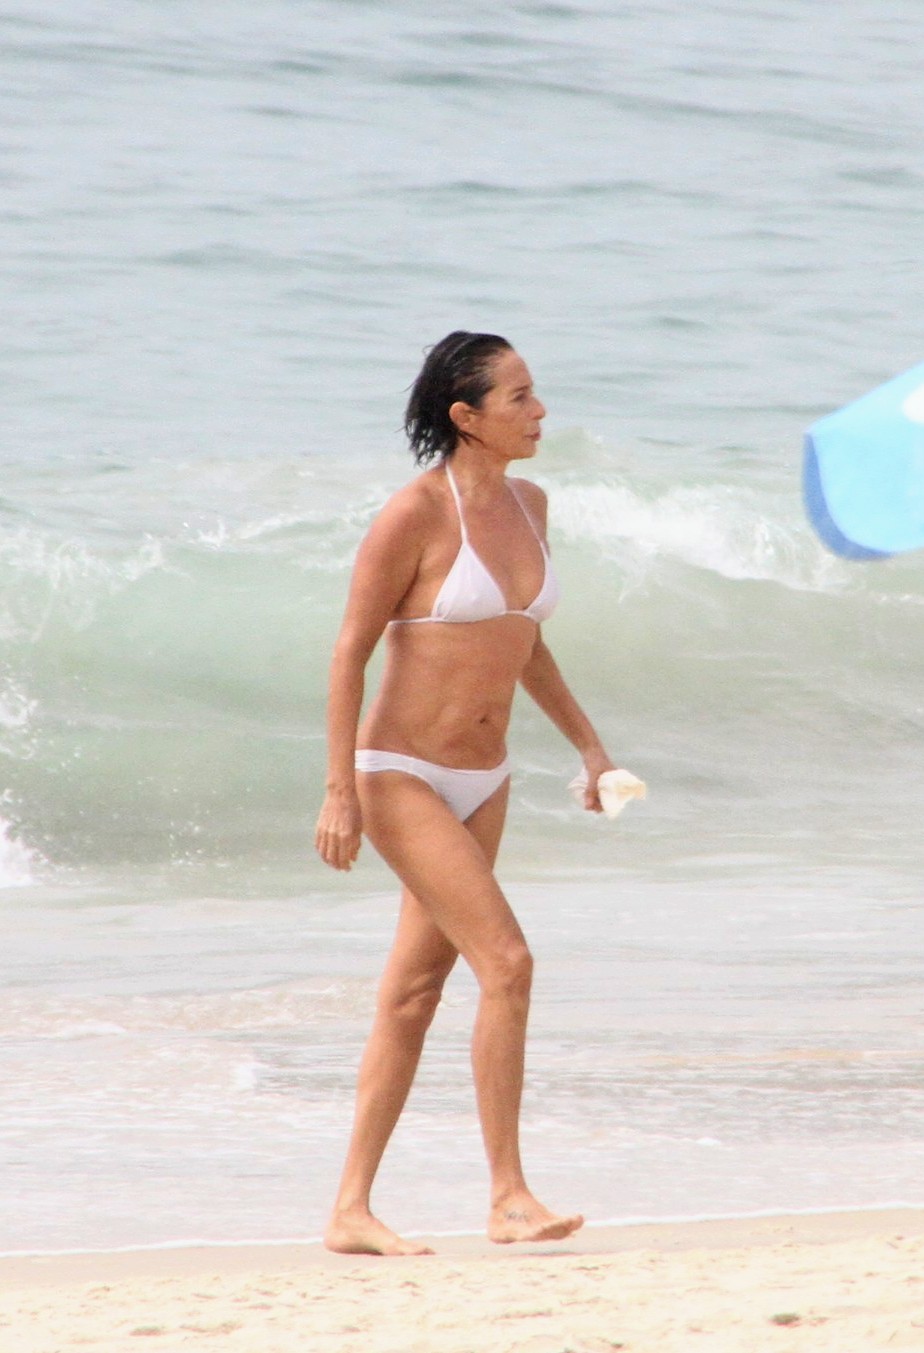 Foto de Andréa Beltrão andando na praia de biquíni branco